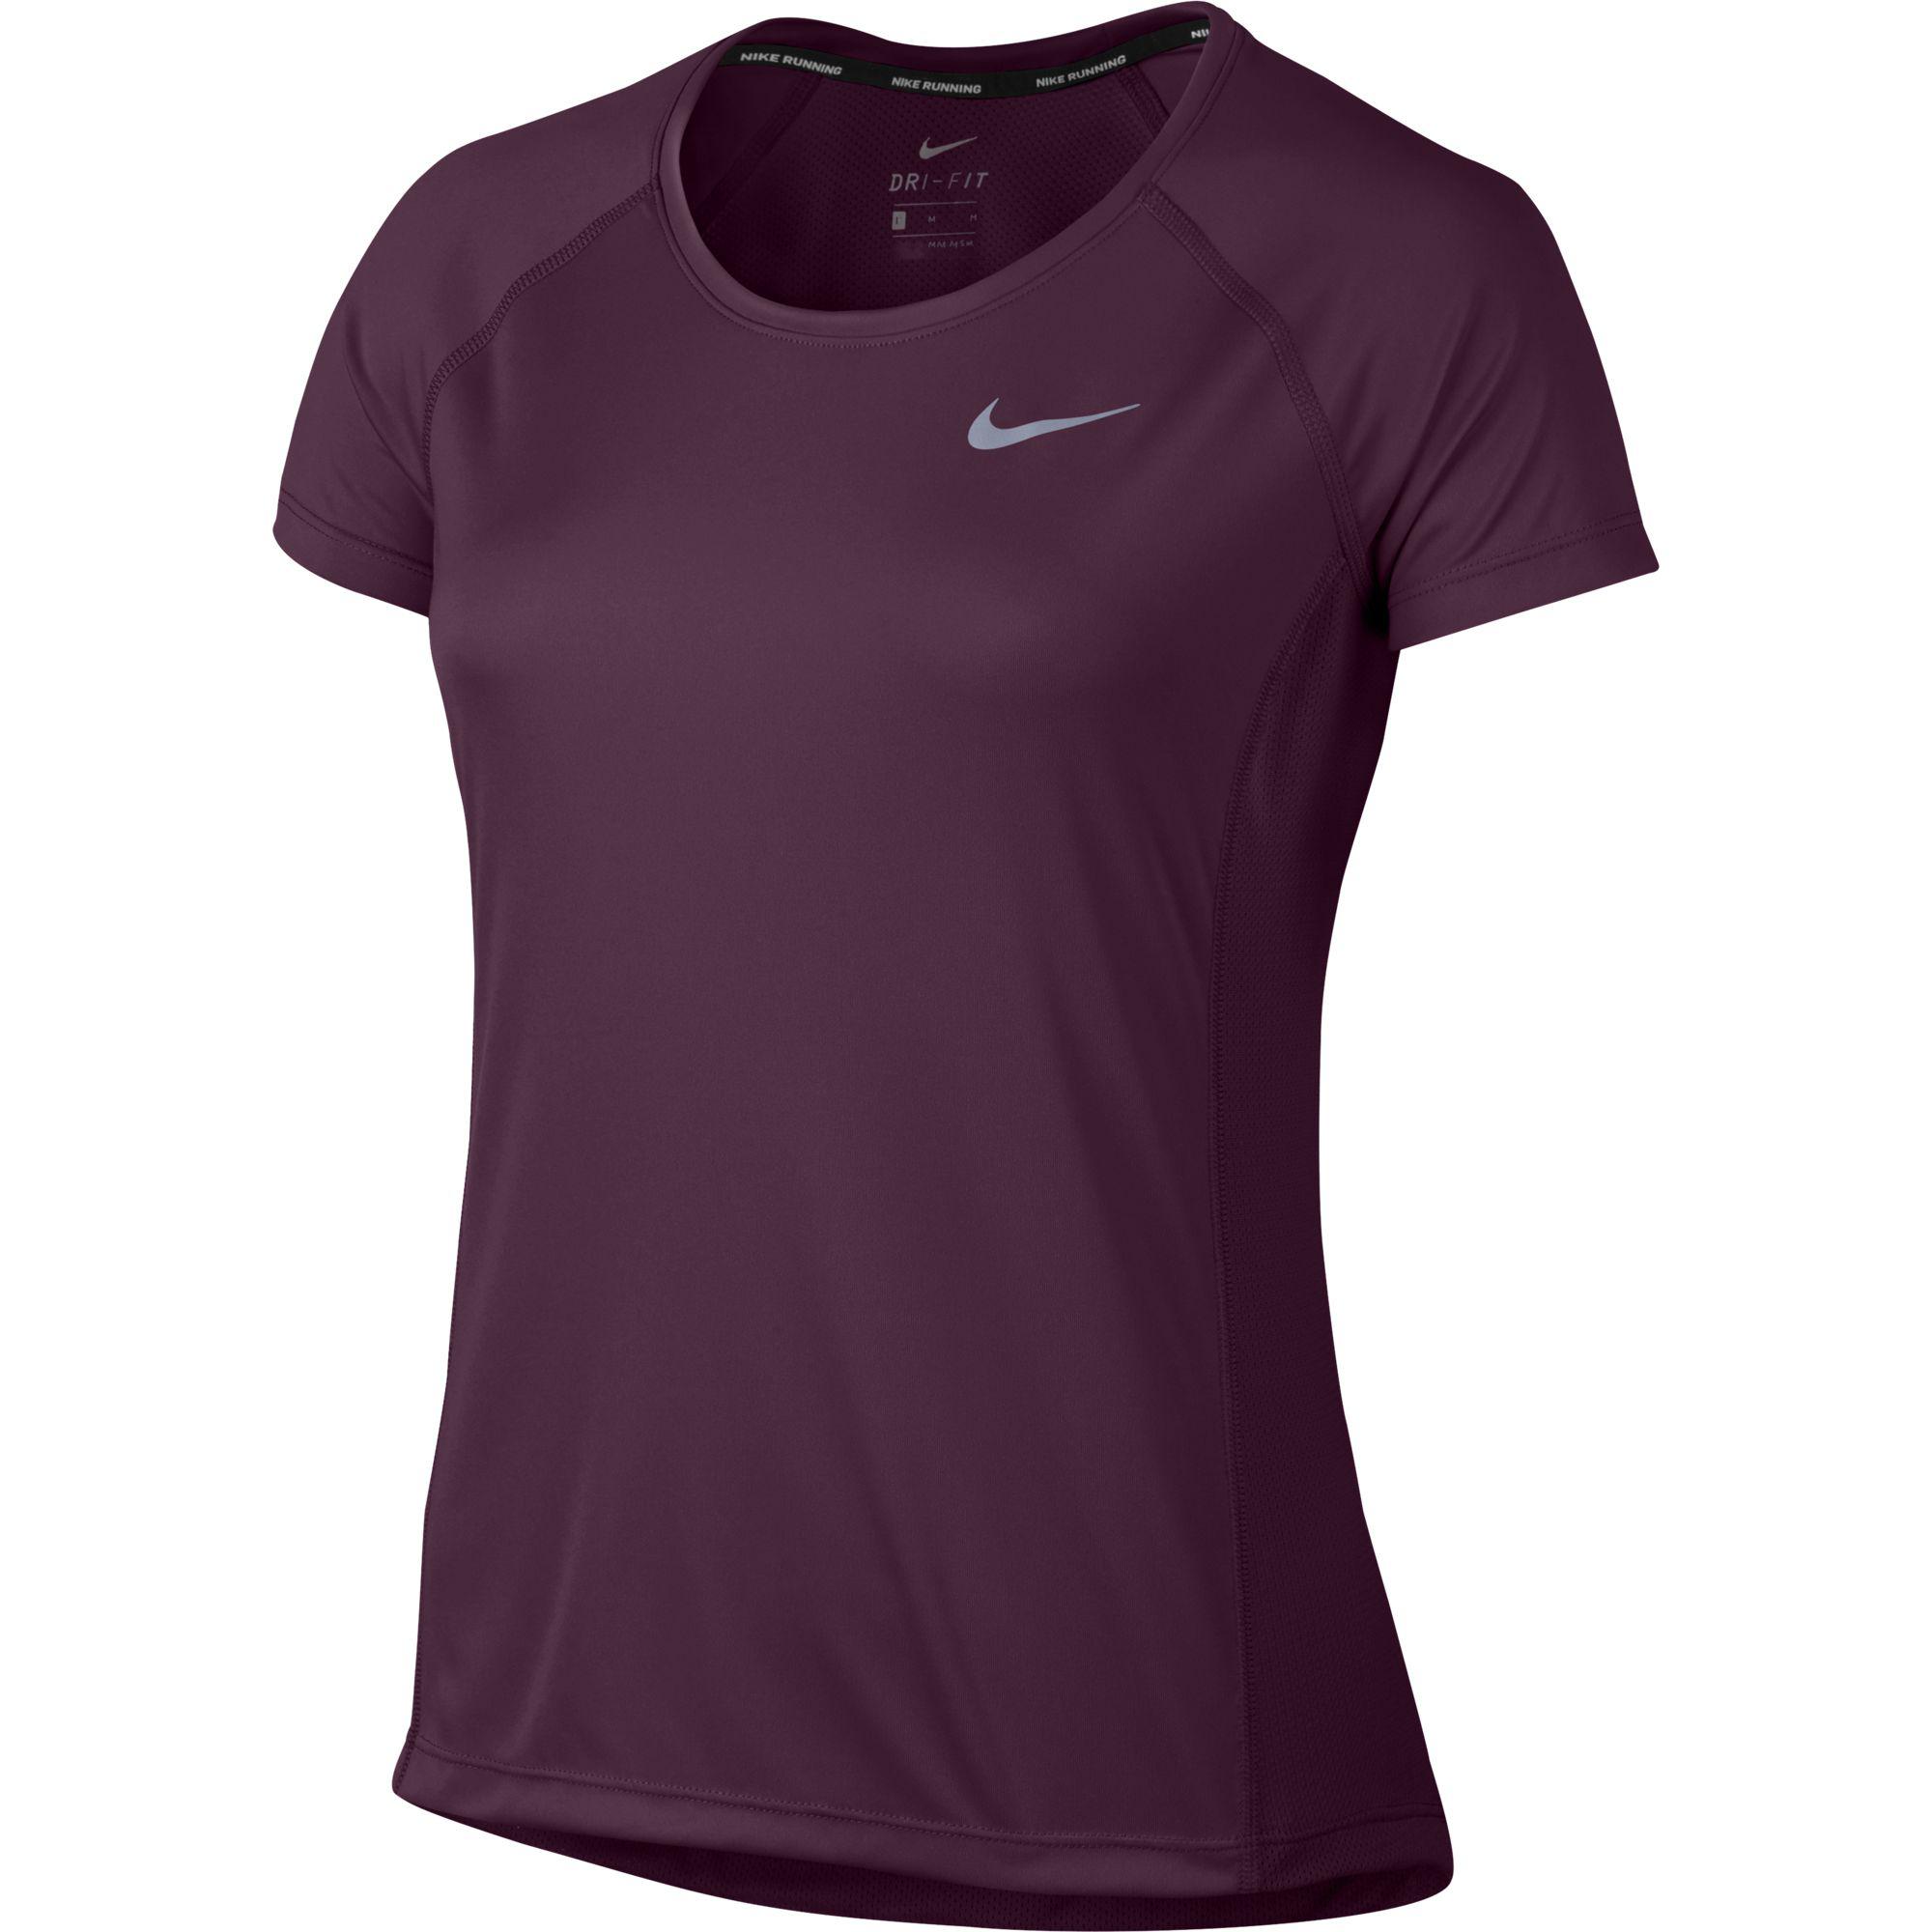 Pine stall Ride Nike Womens Dry Miler Run Top - Bordeaux - Tennisnuts.com